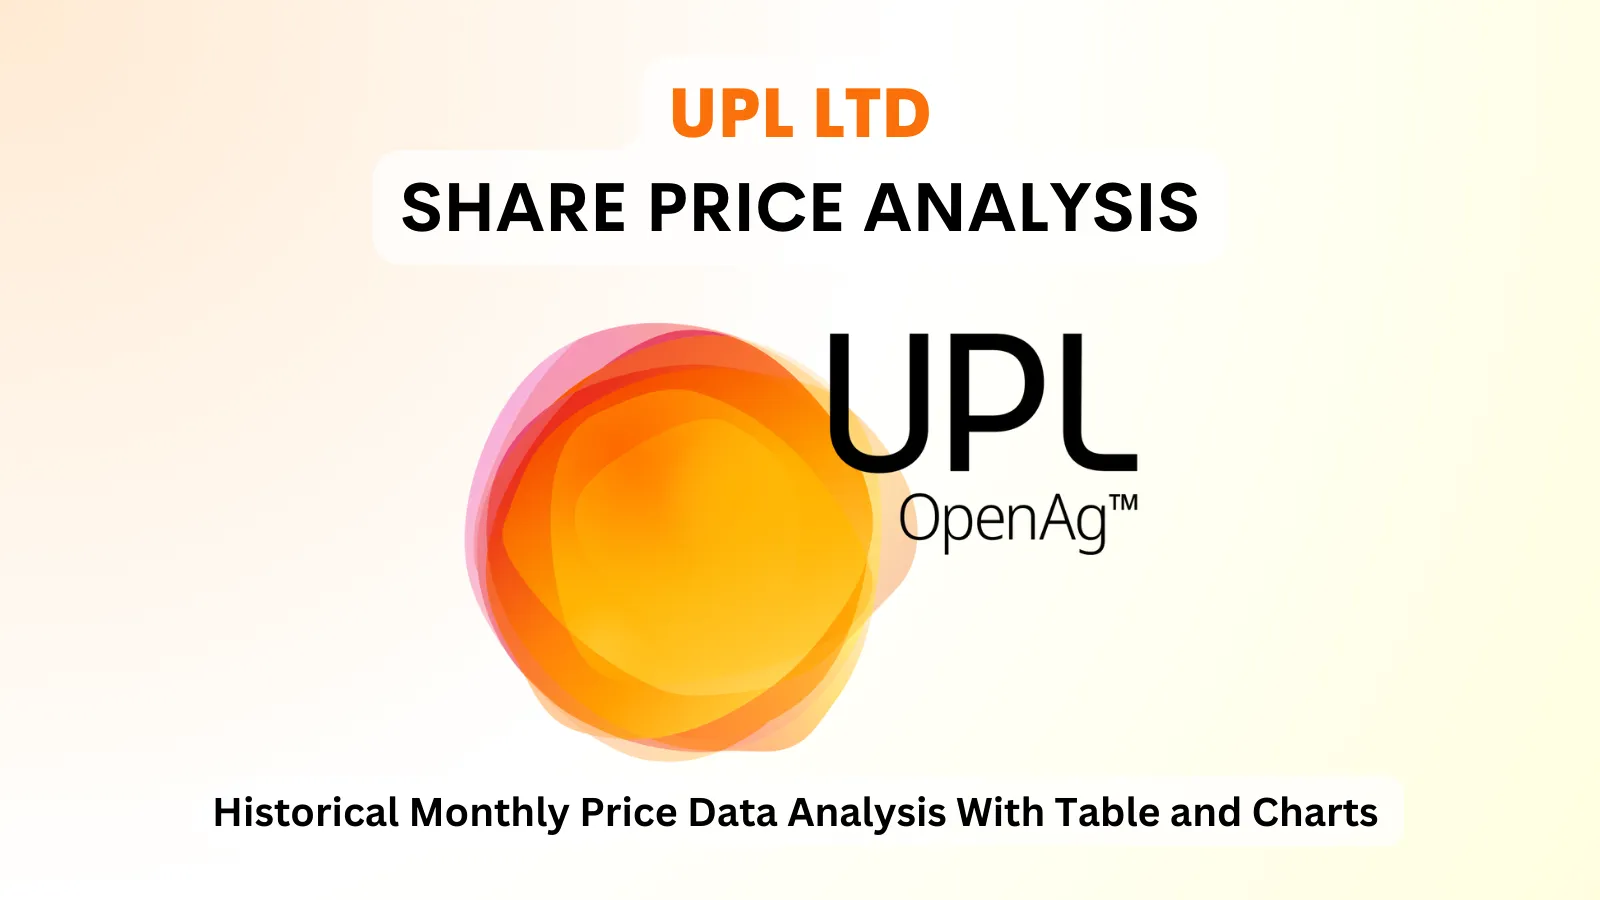 UPL Ltd share price analysis